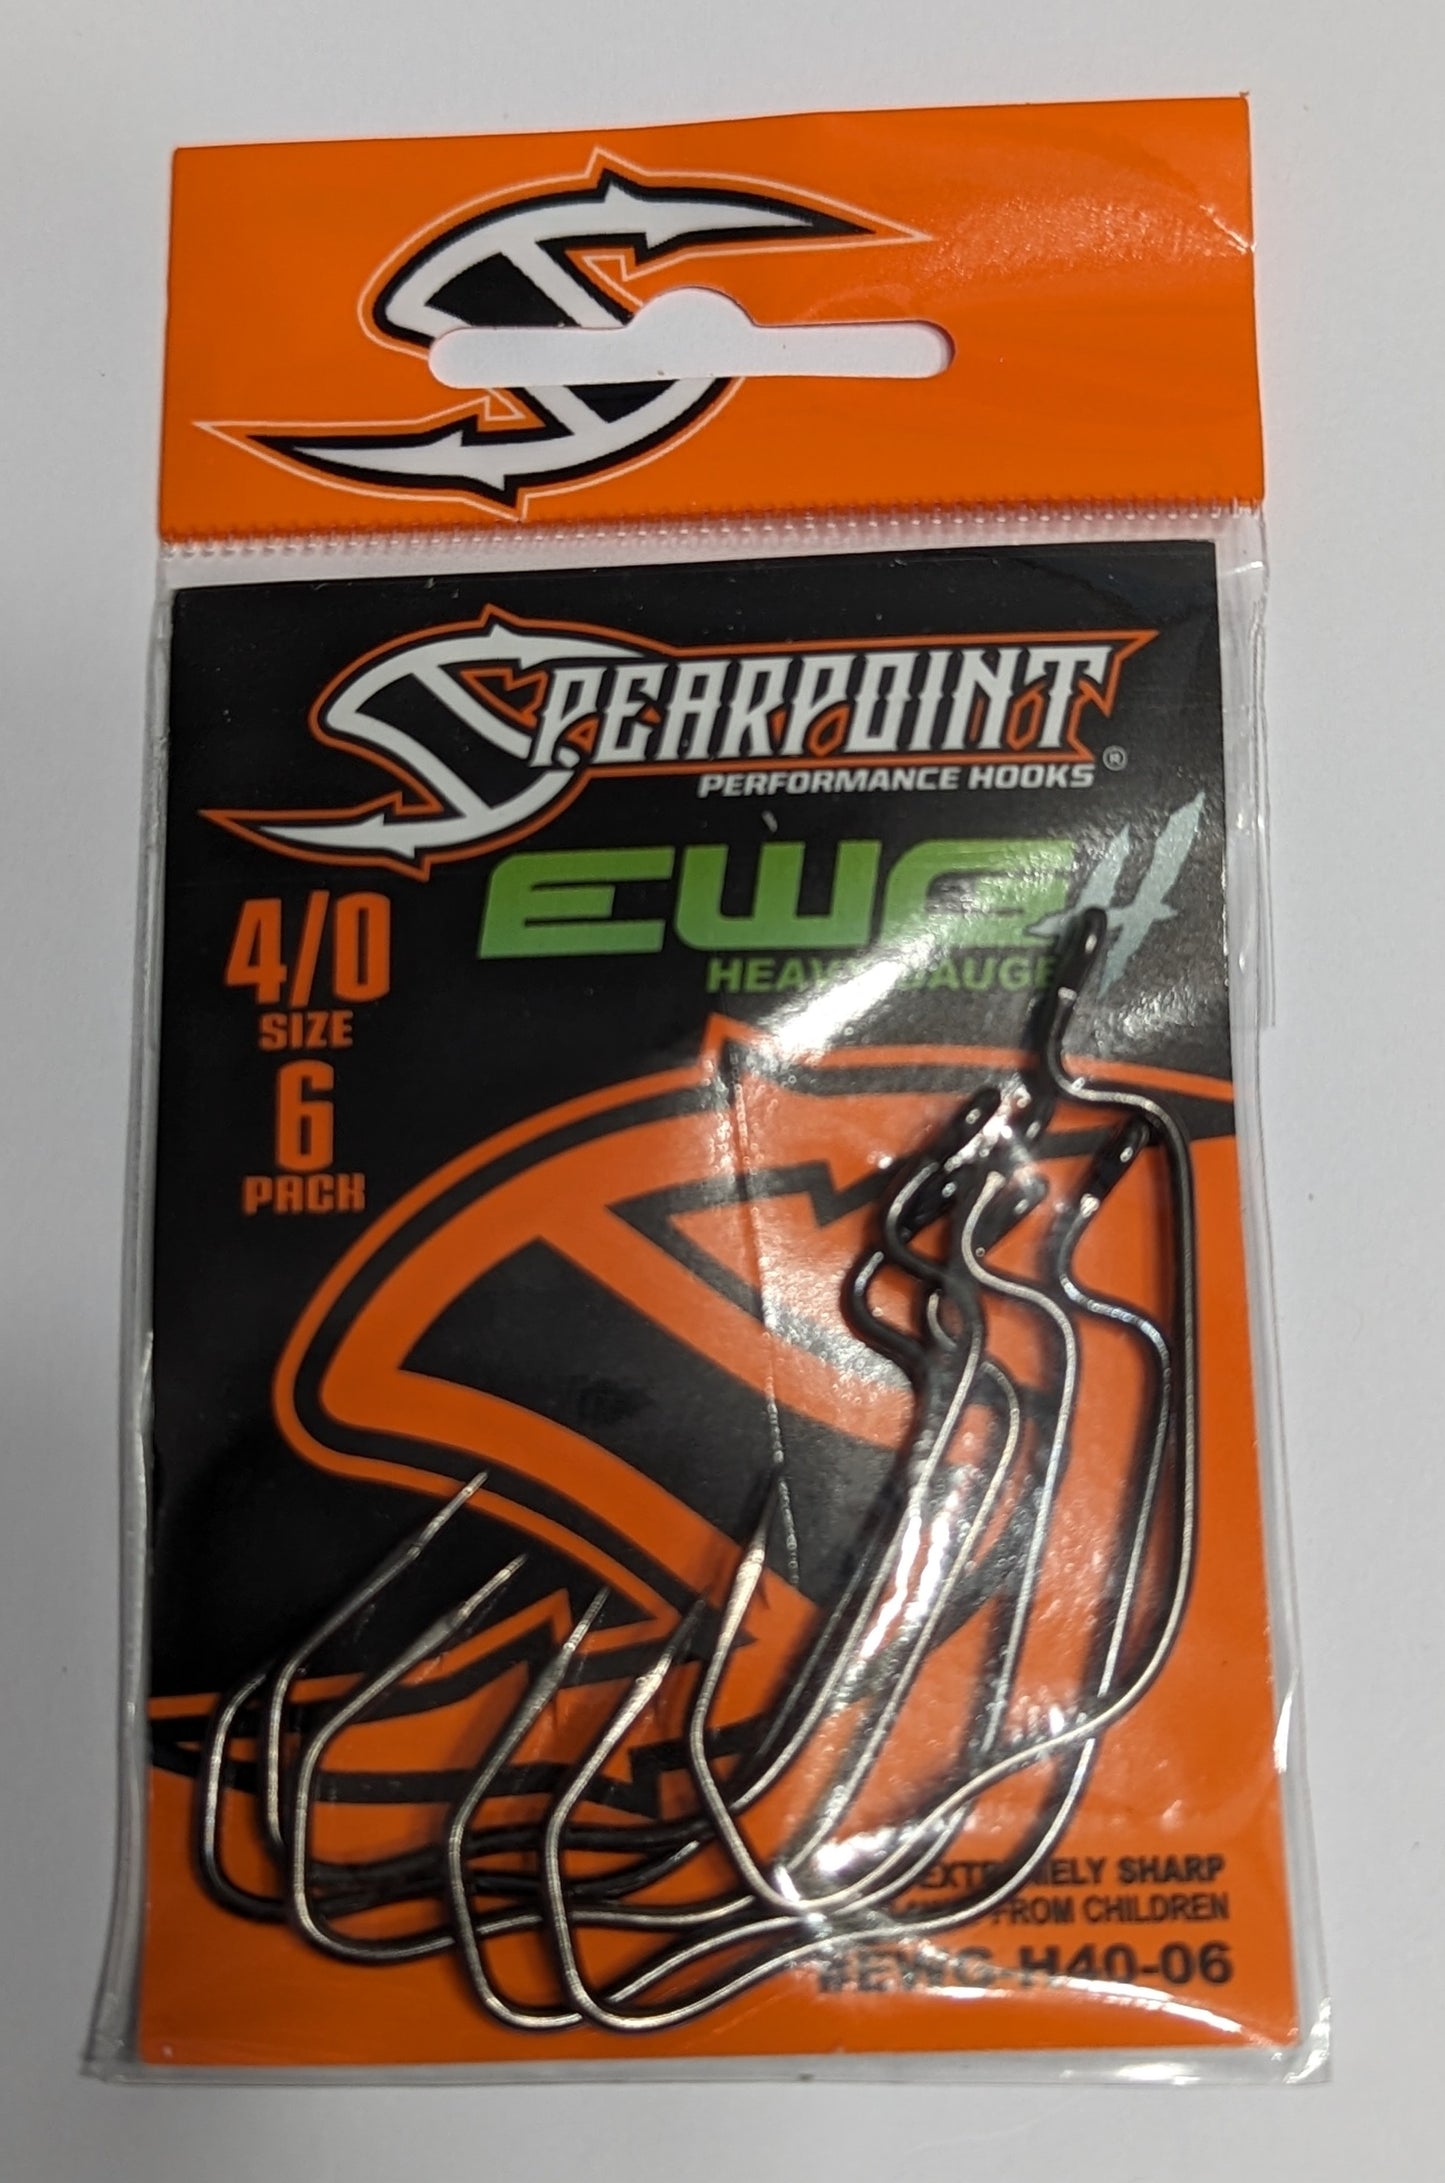 Spearpoint Performance Hooks - EWG 6 pack Heavy Gauge